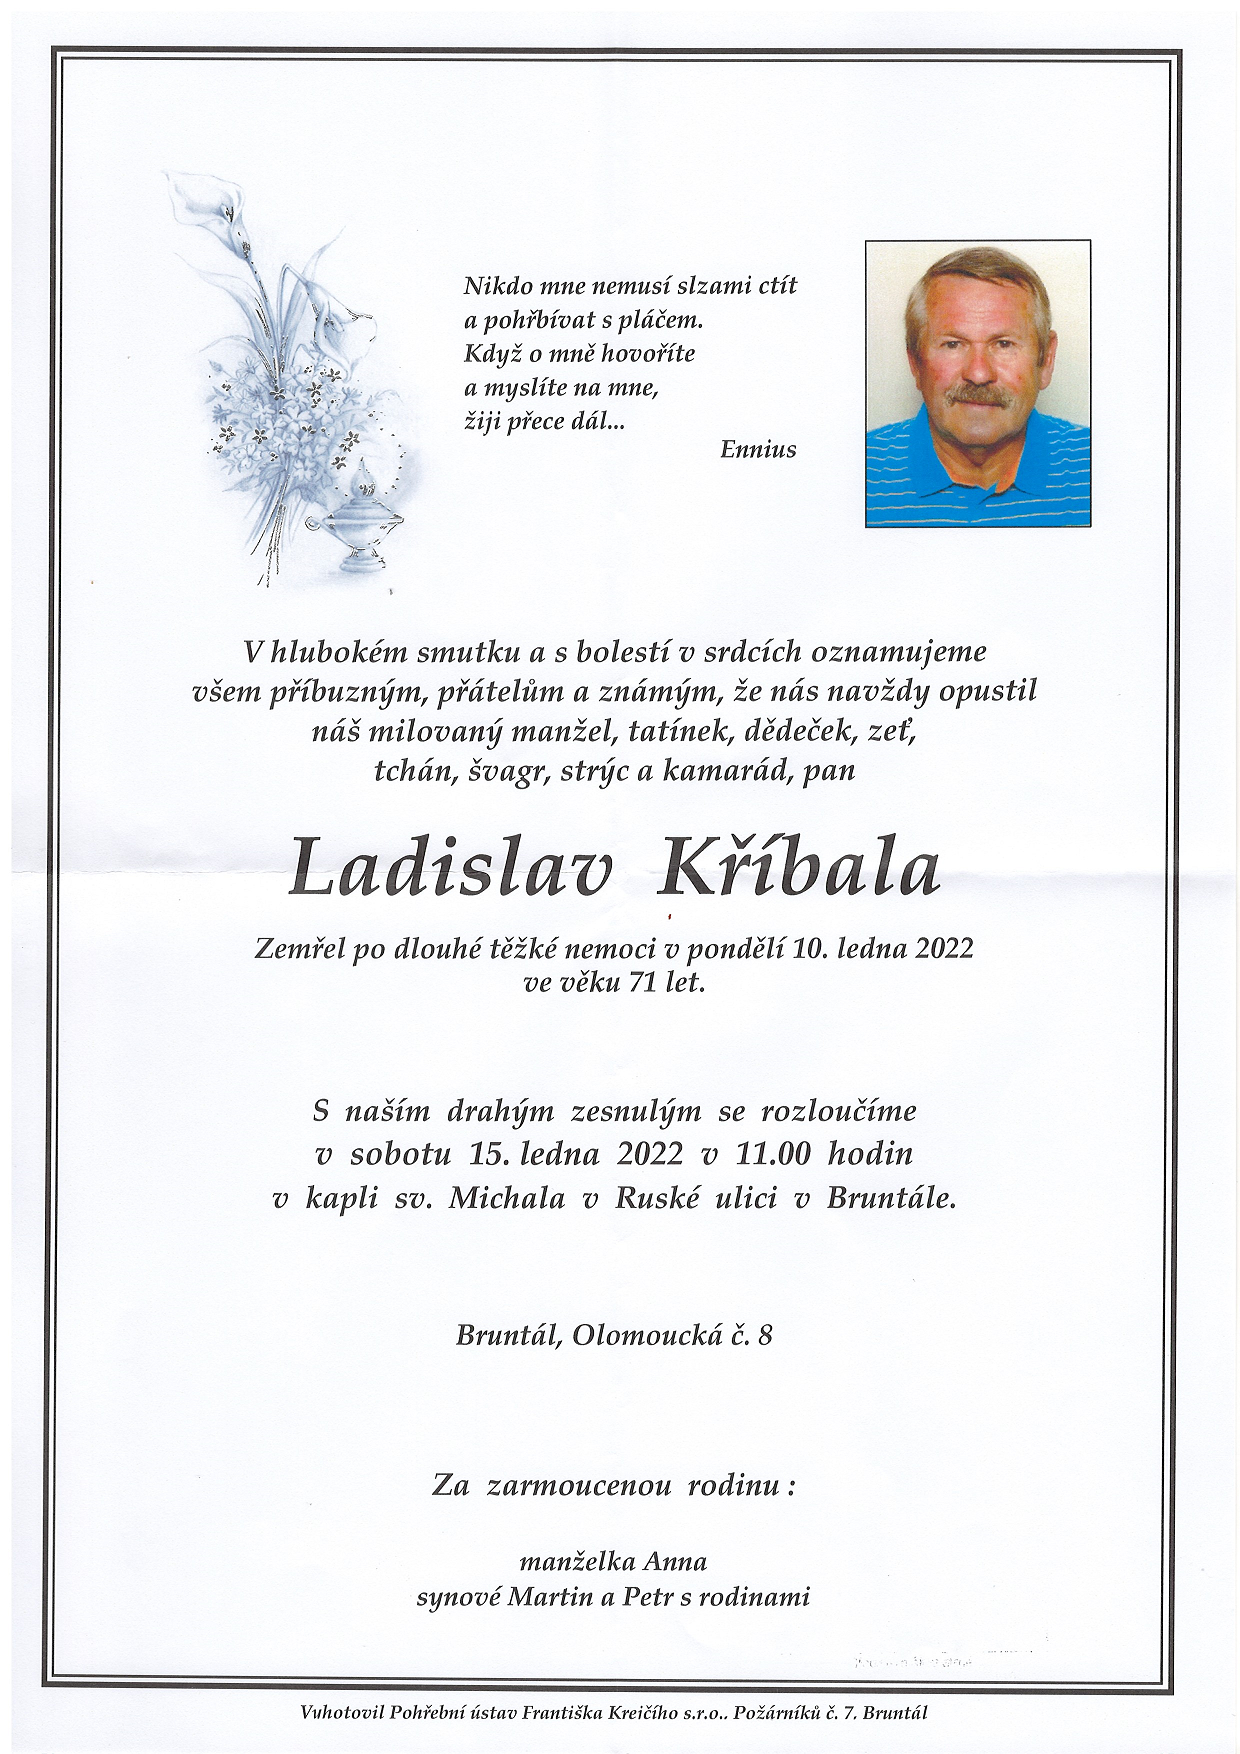 Ladislav Křibala - parte.png